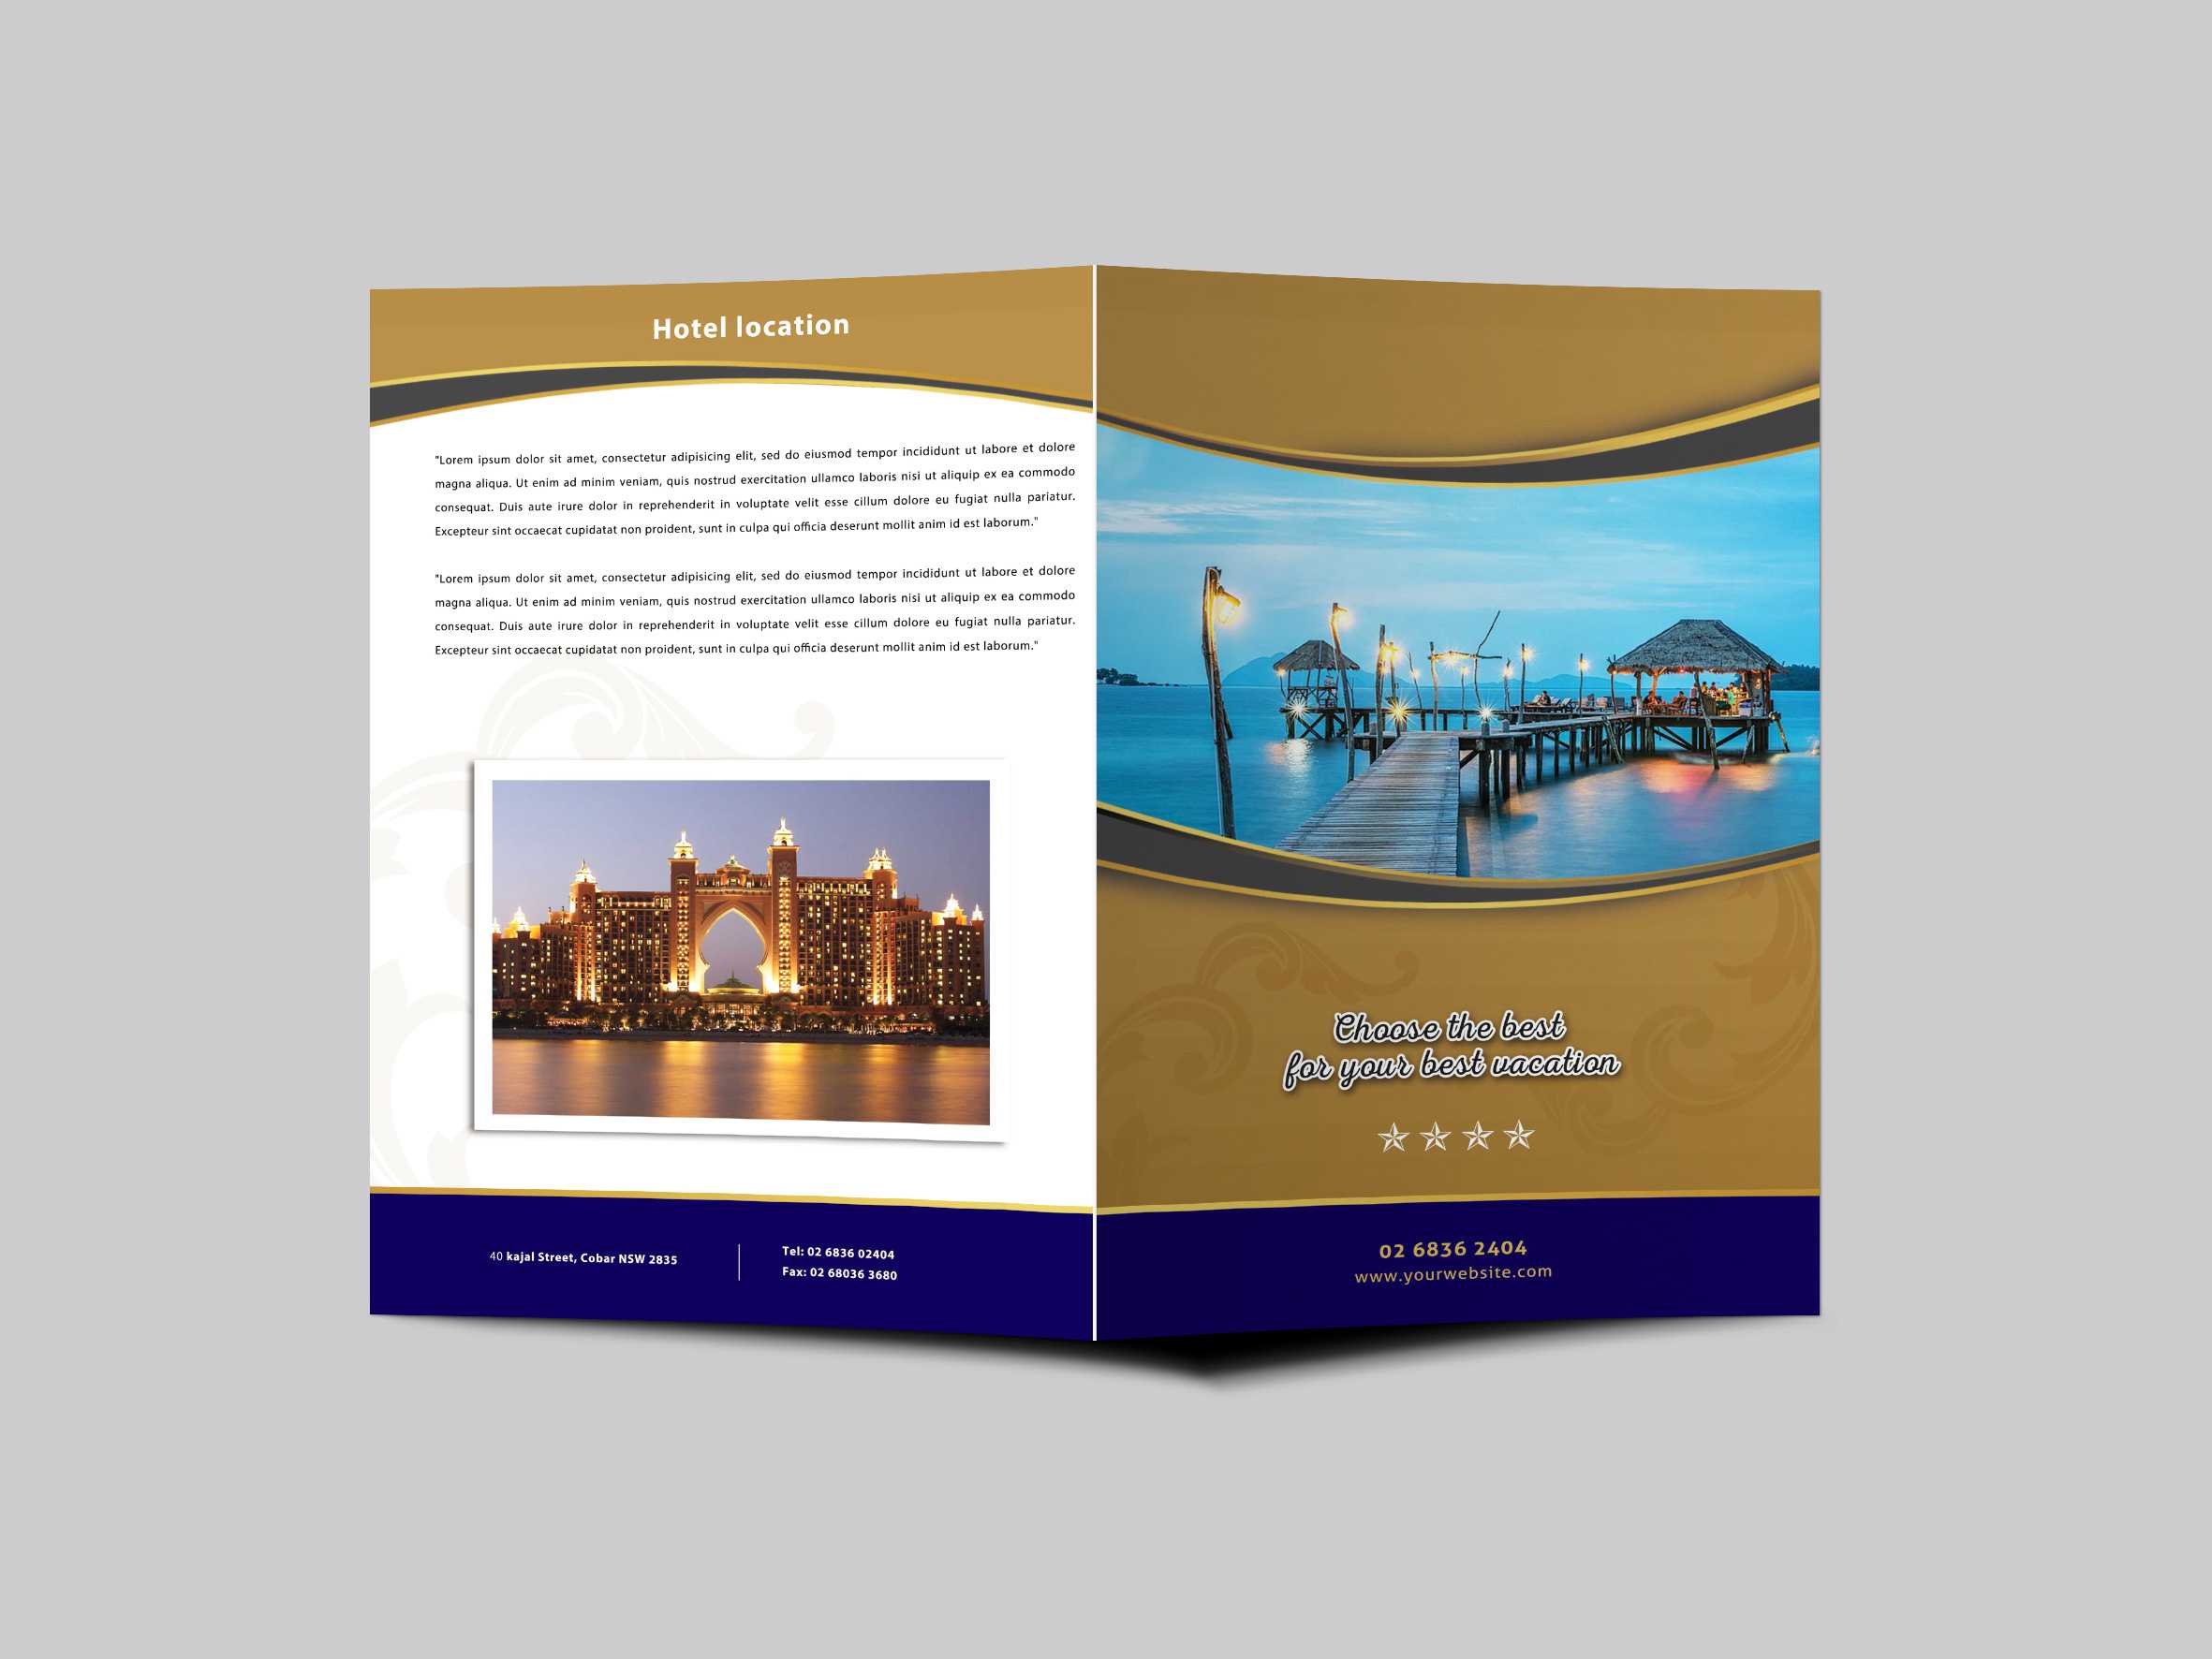 Hotel Resort Bi Fold Brochure Design Templatearun Kumar For Hotel Brochure Design Templates